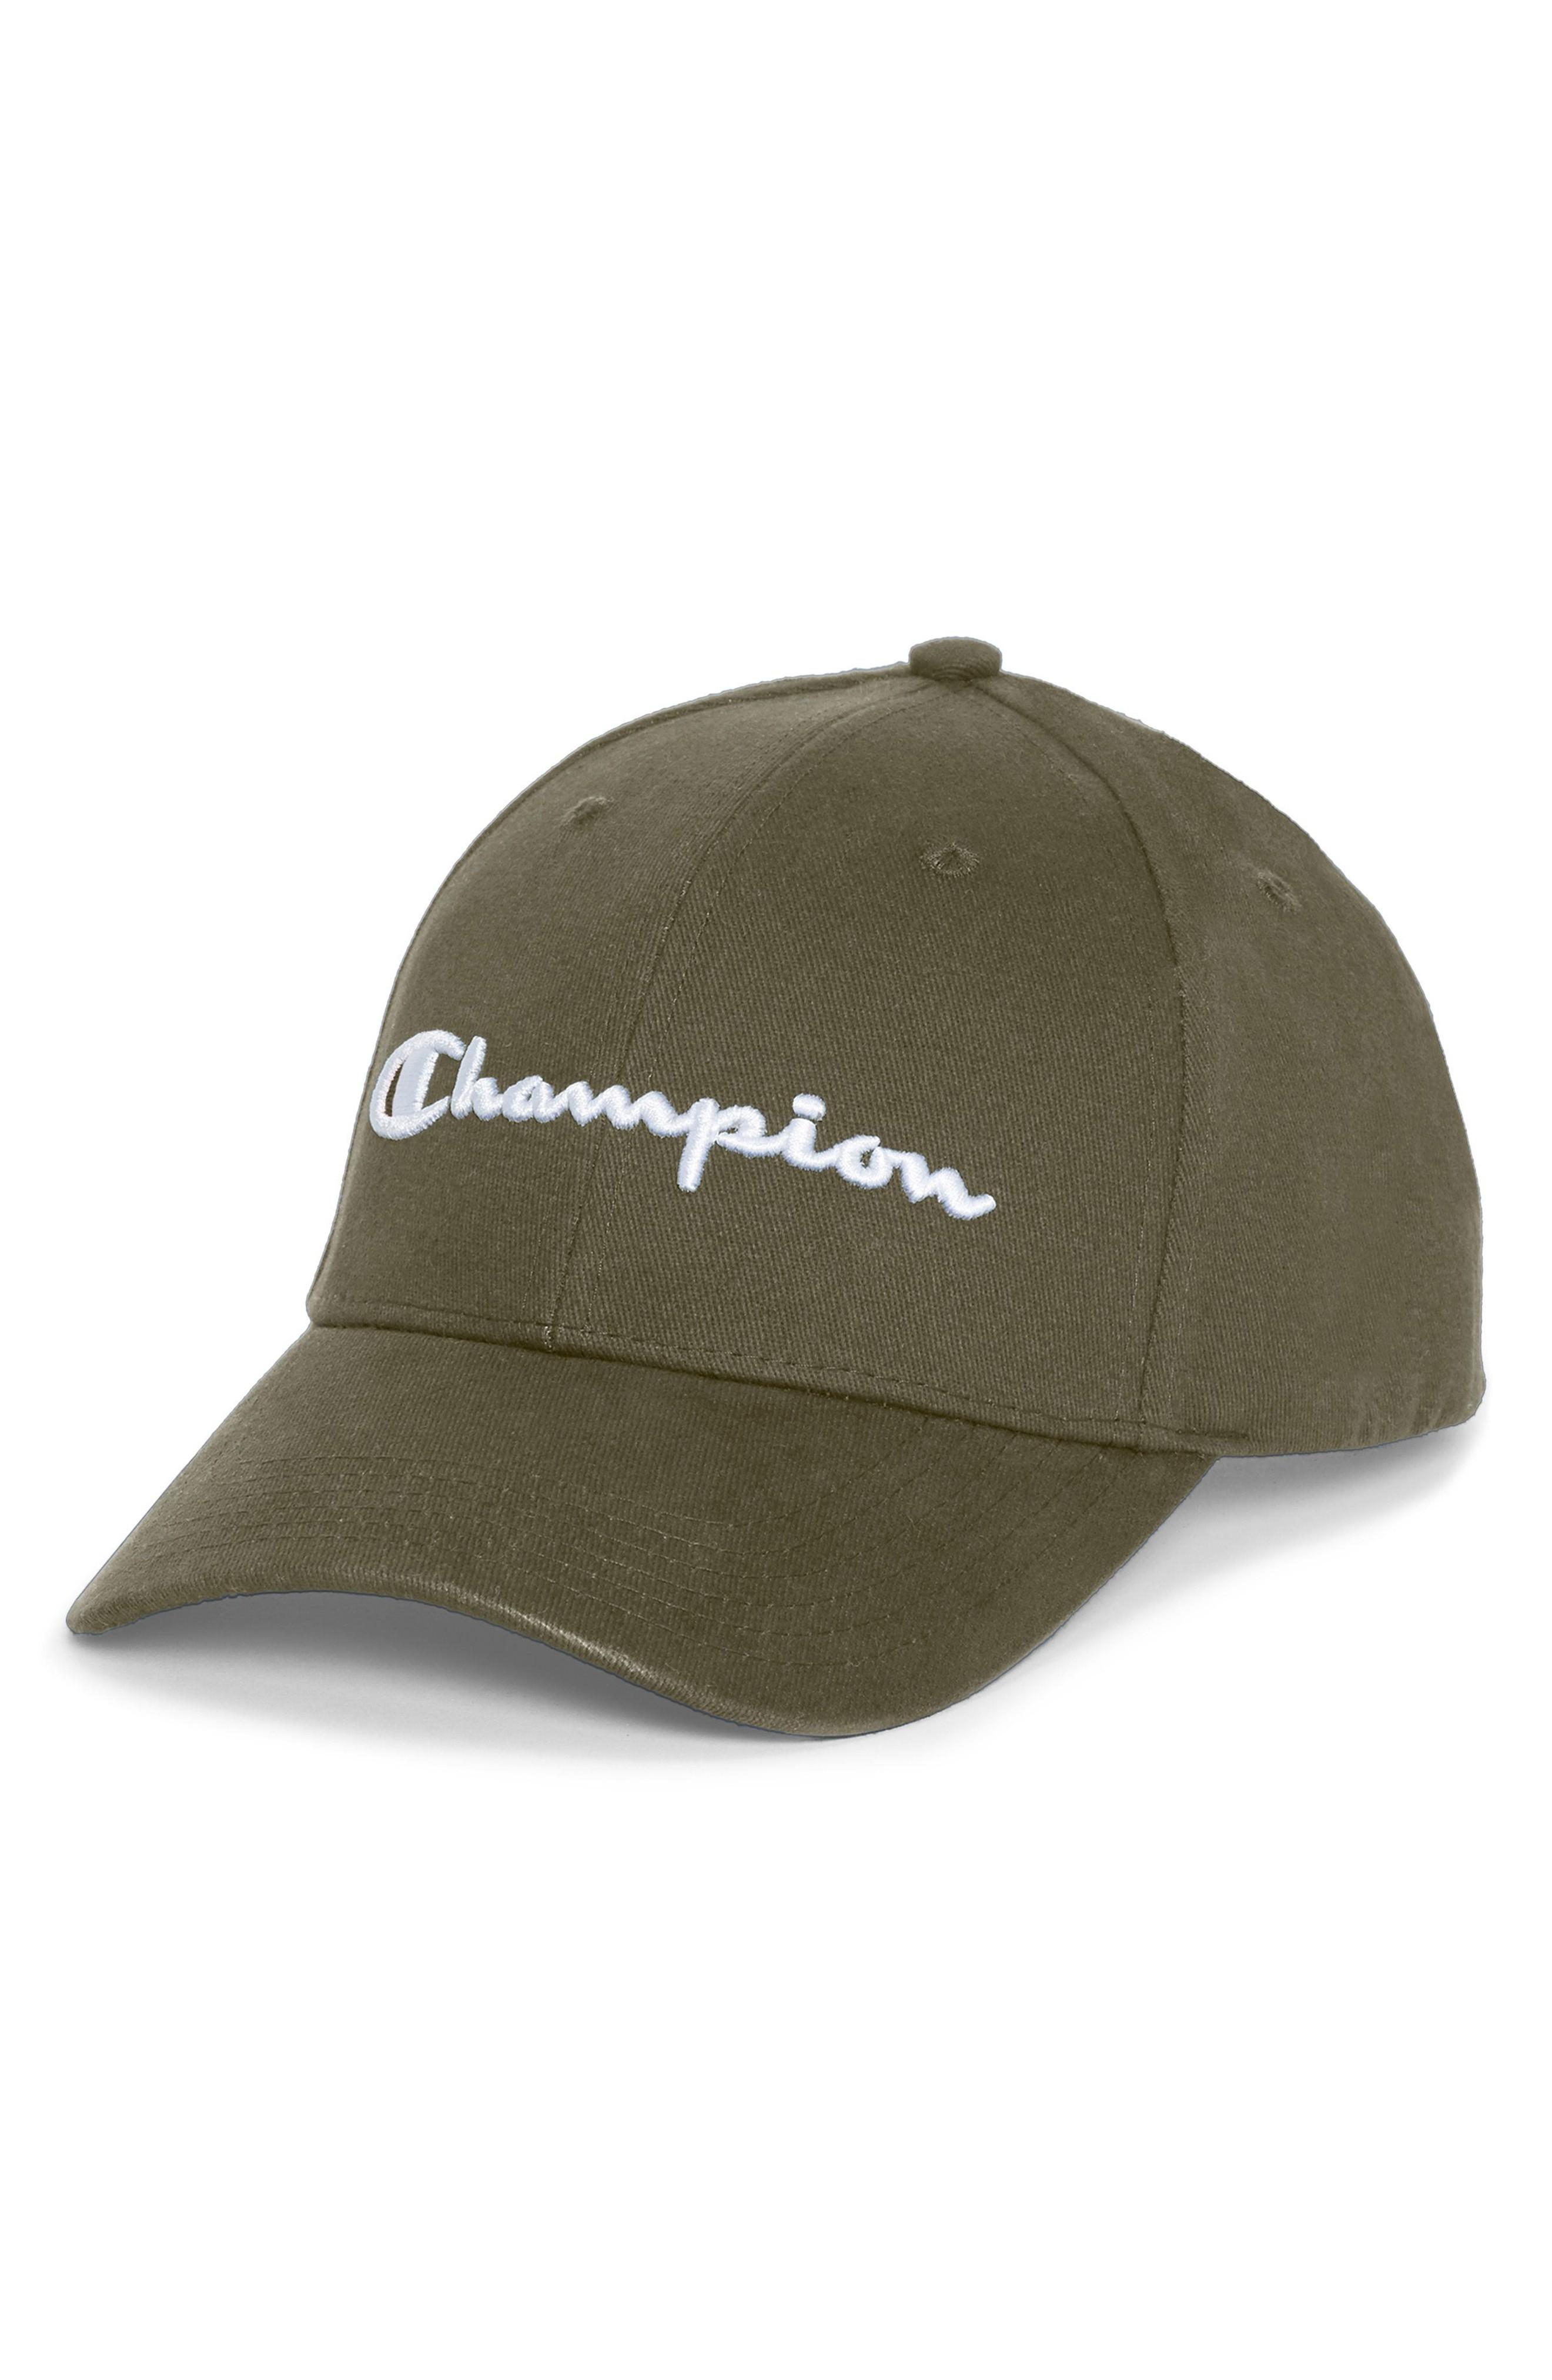 green champion hat